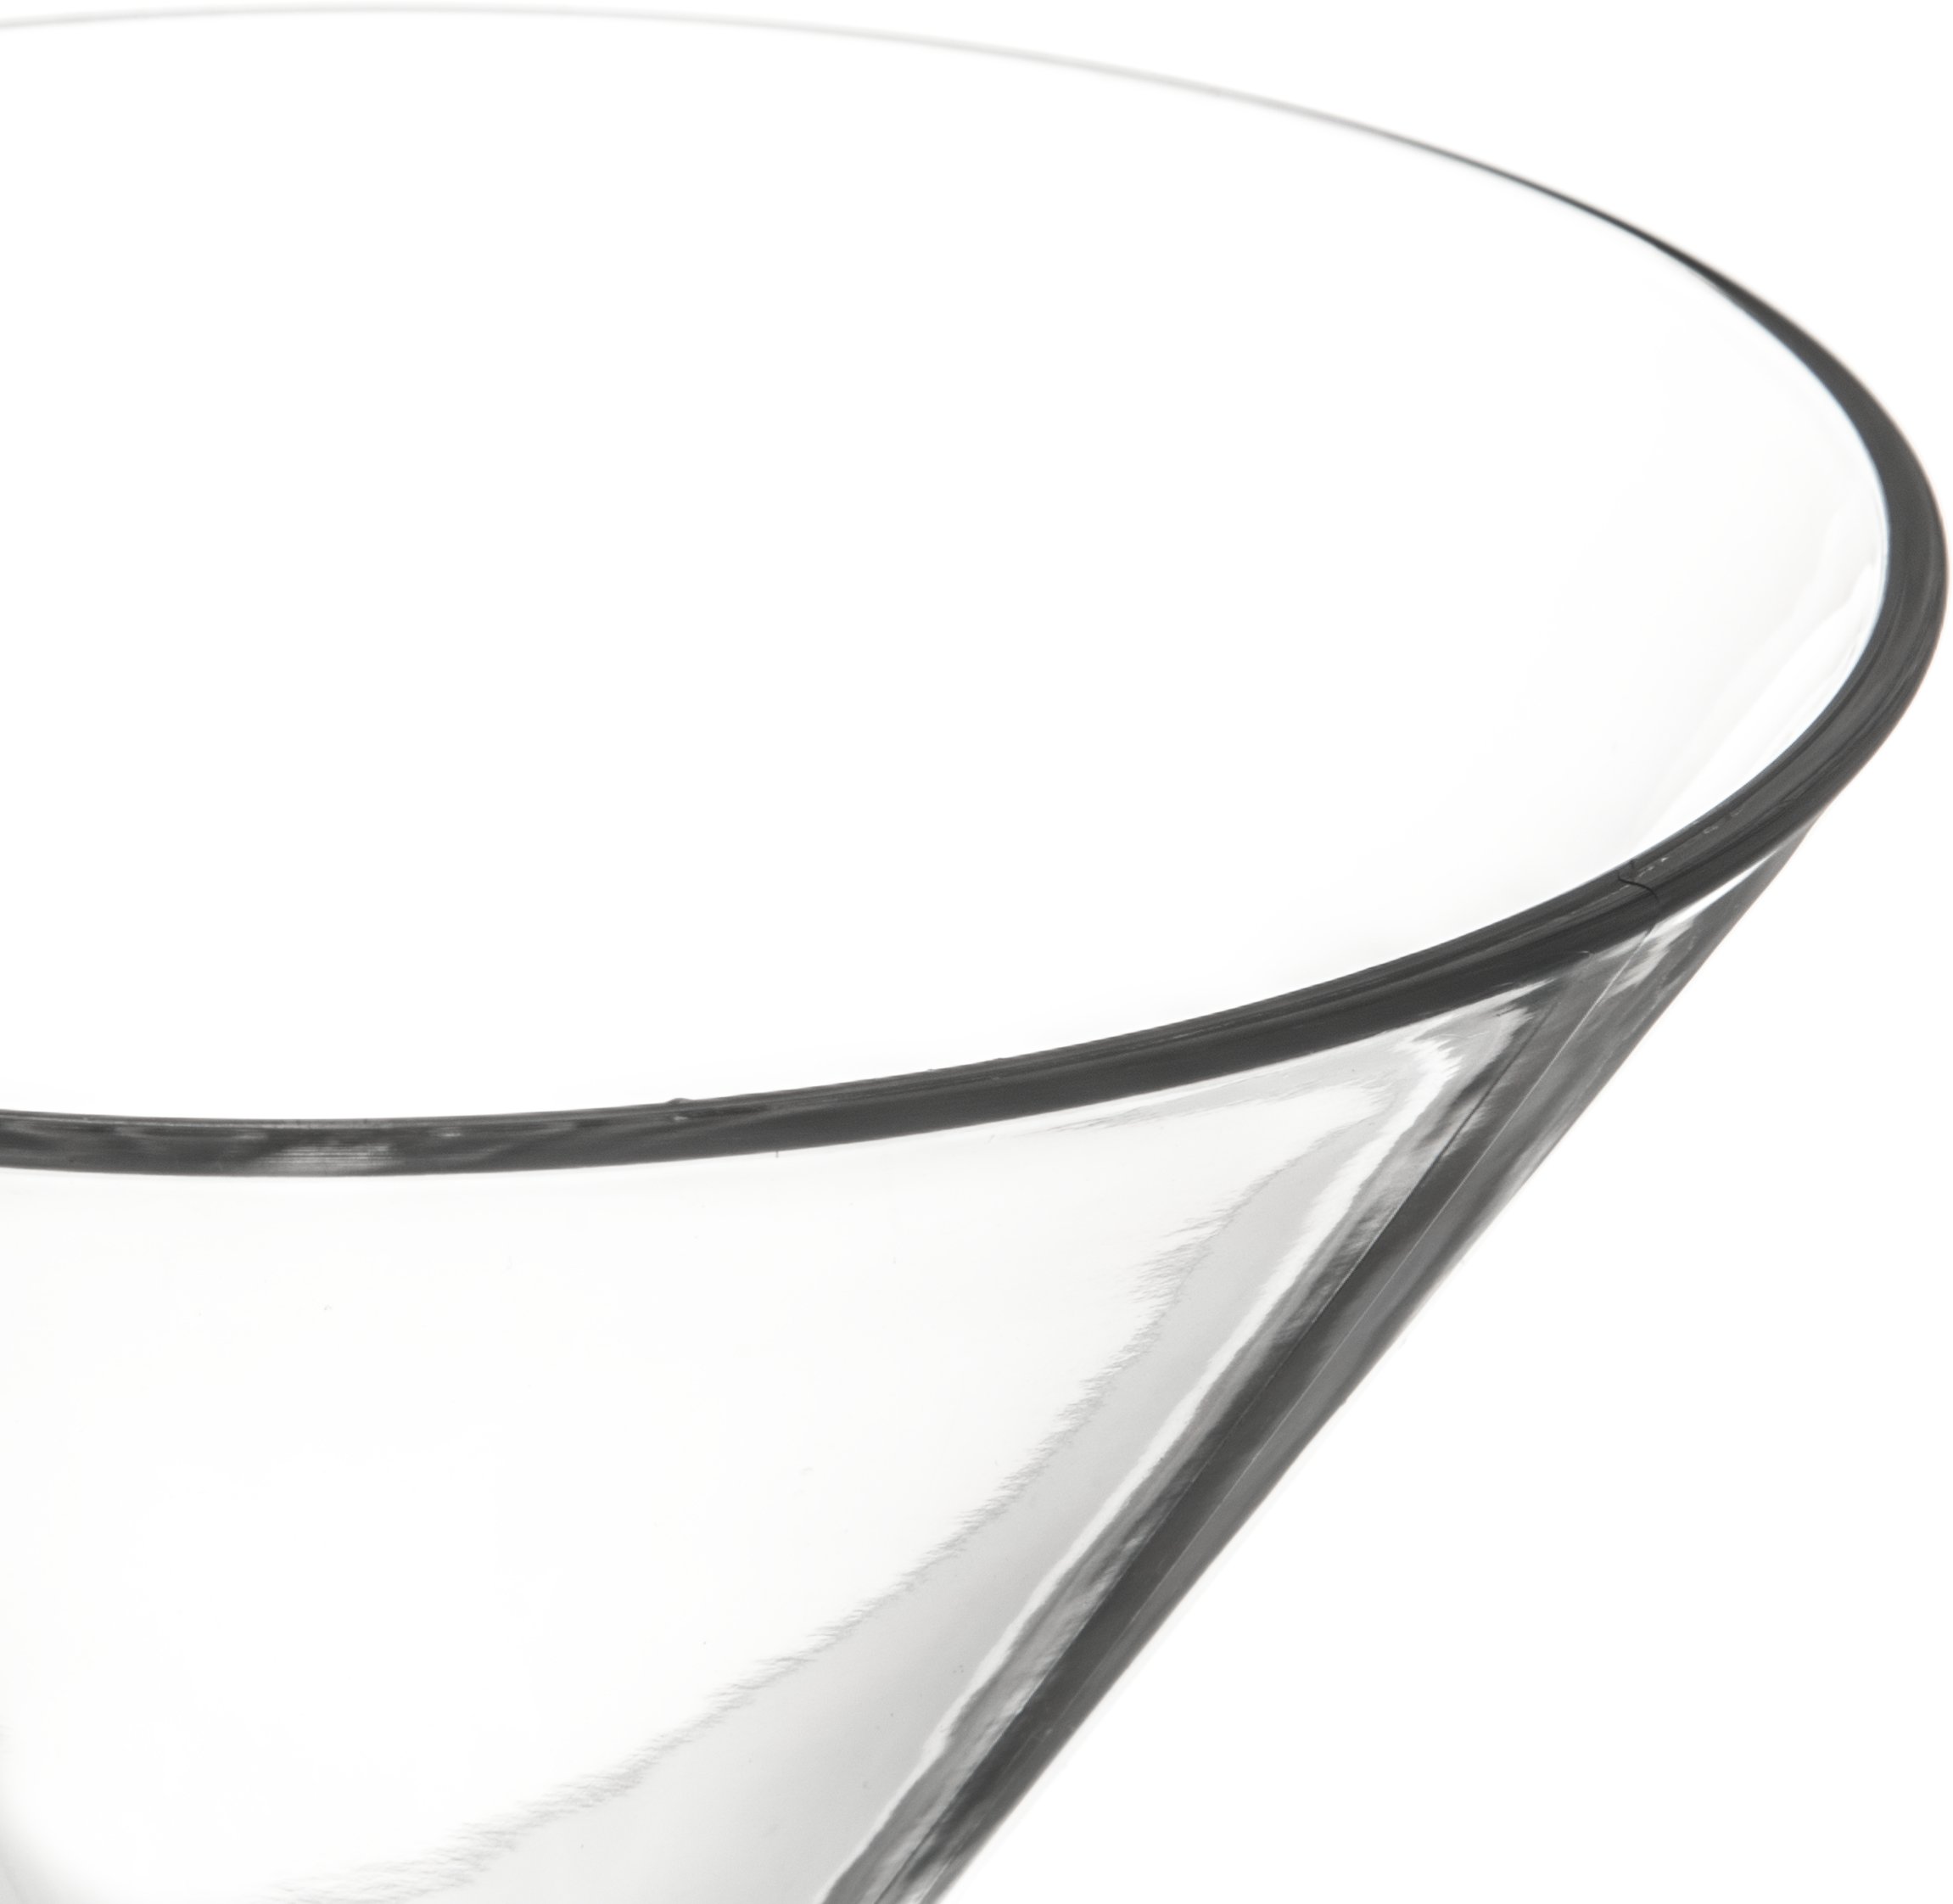 CFS 564607 Alibi Shatter-Resistant Plastic Martini Glass, 9 oz., 6.63